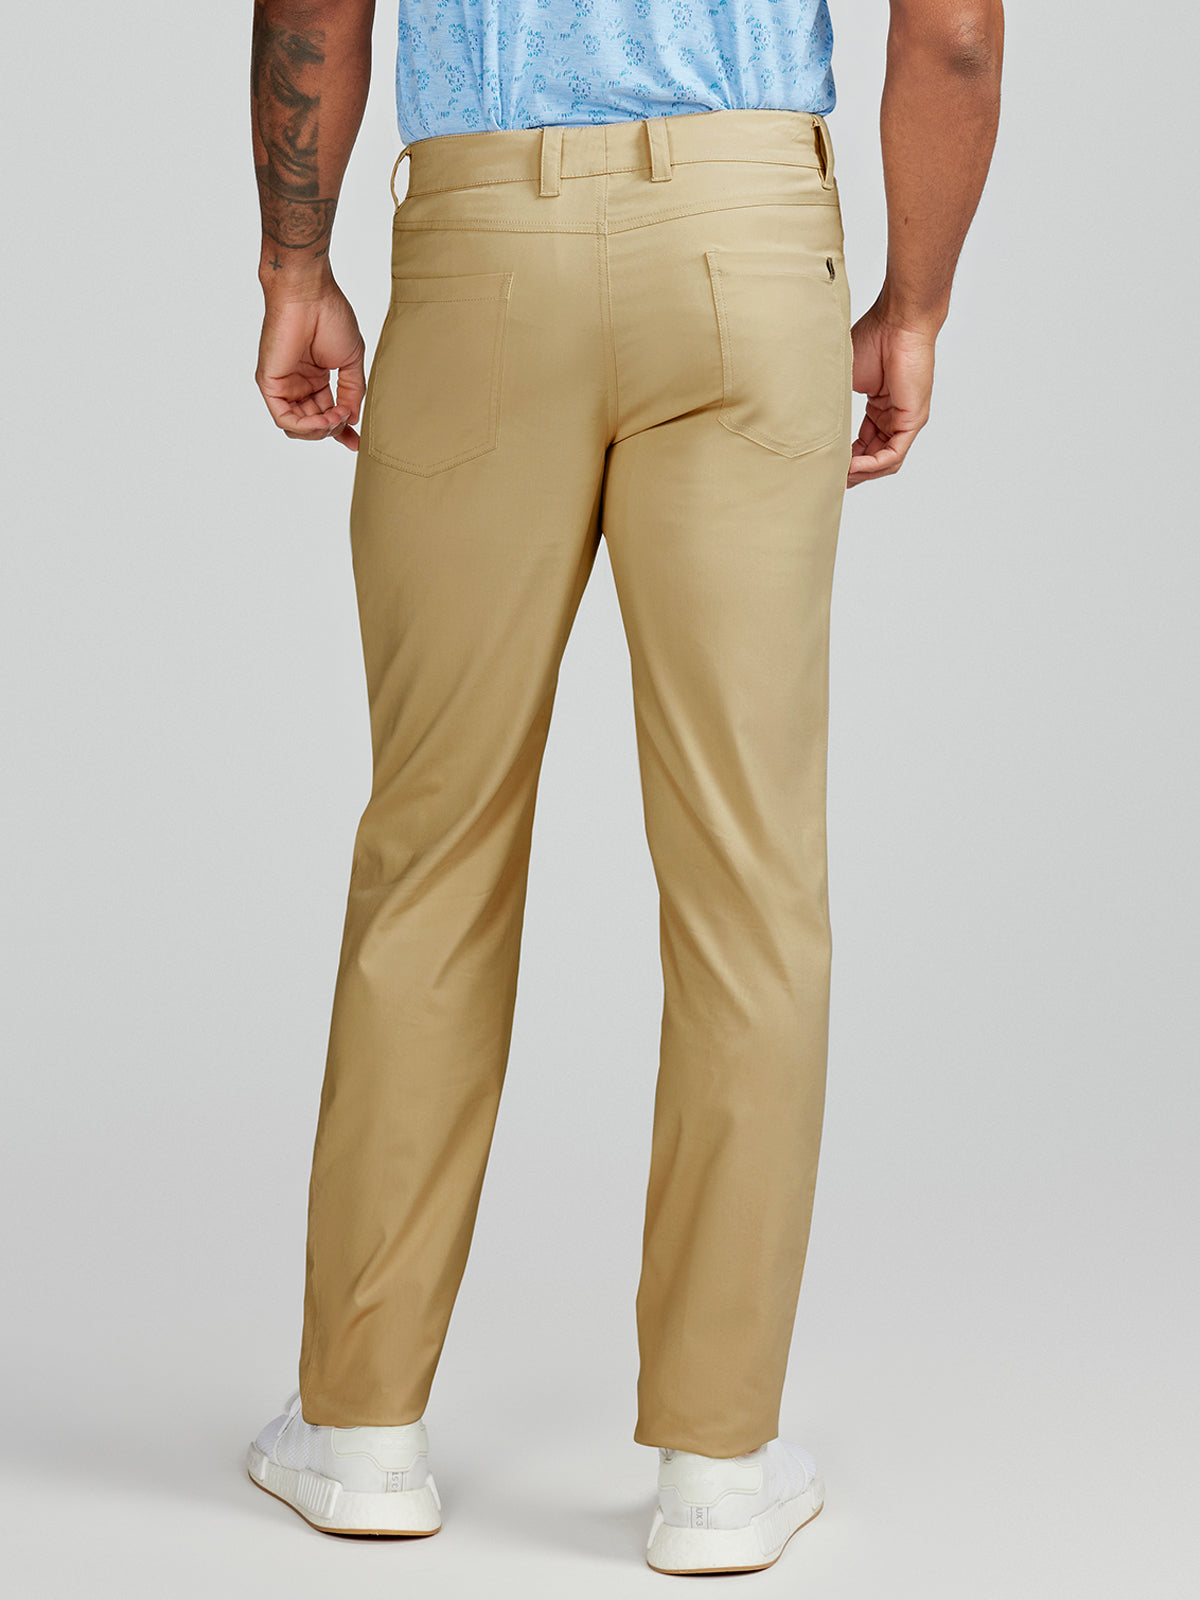 New Balance Men's All Motion Golf Pants Grey Blue Comfort Fit